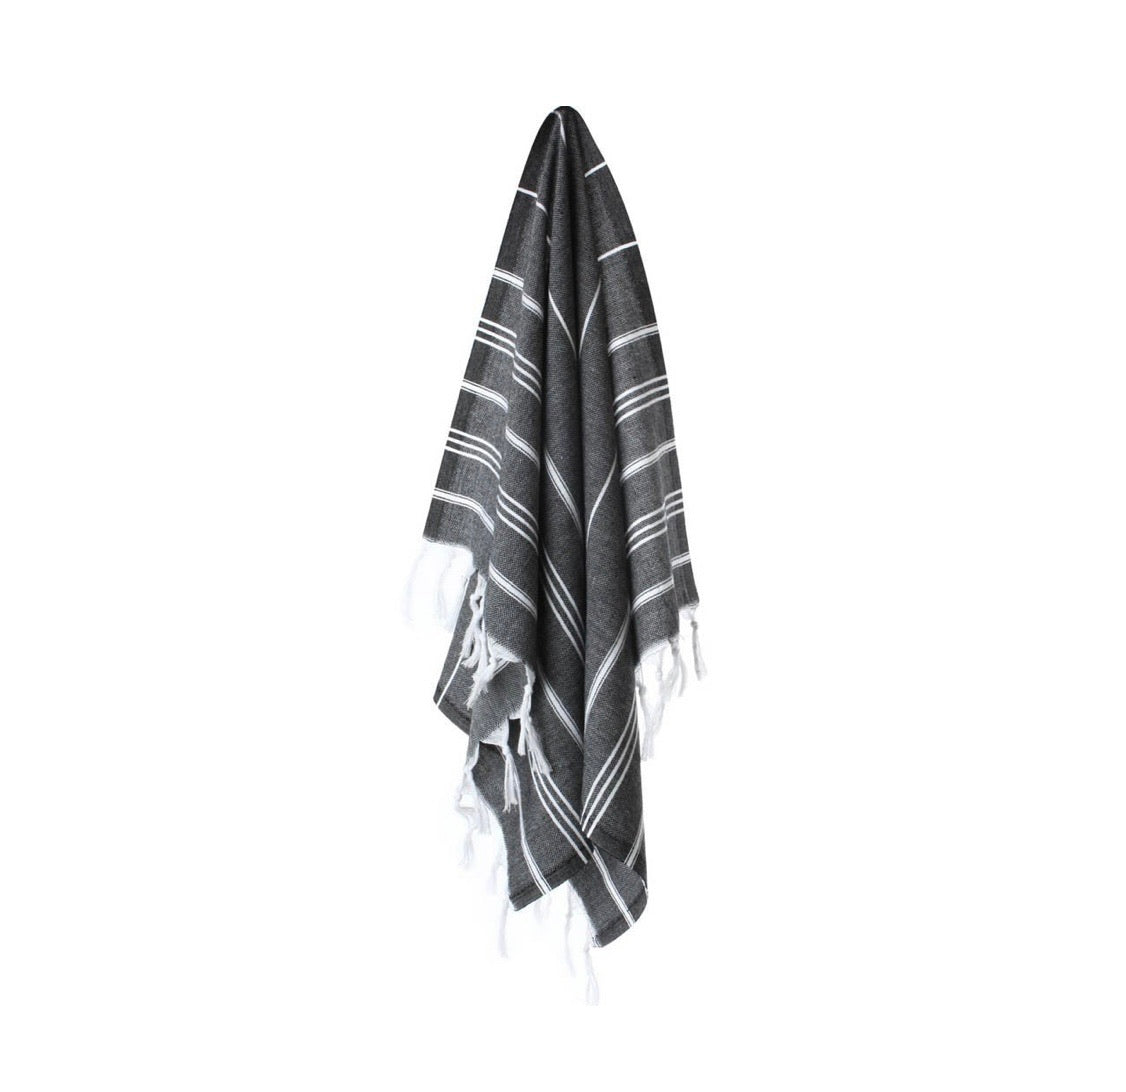 Hand-loomed Turkish Cotton Towel - Black Dots –